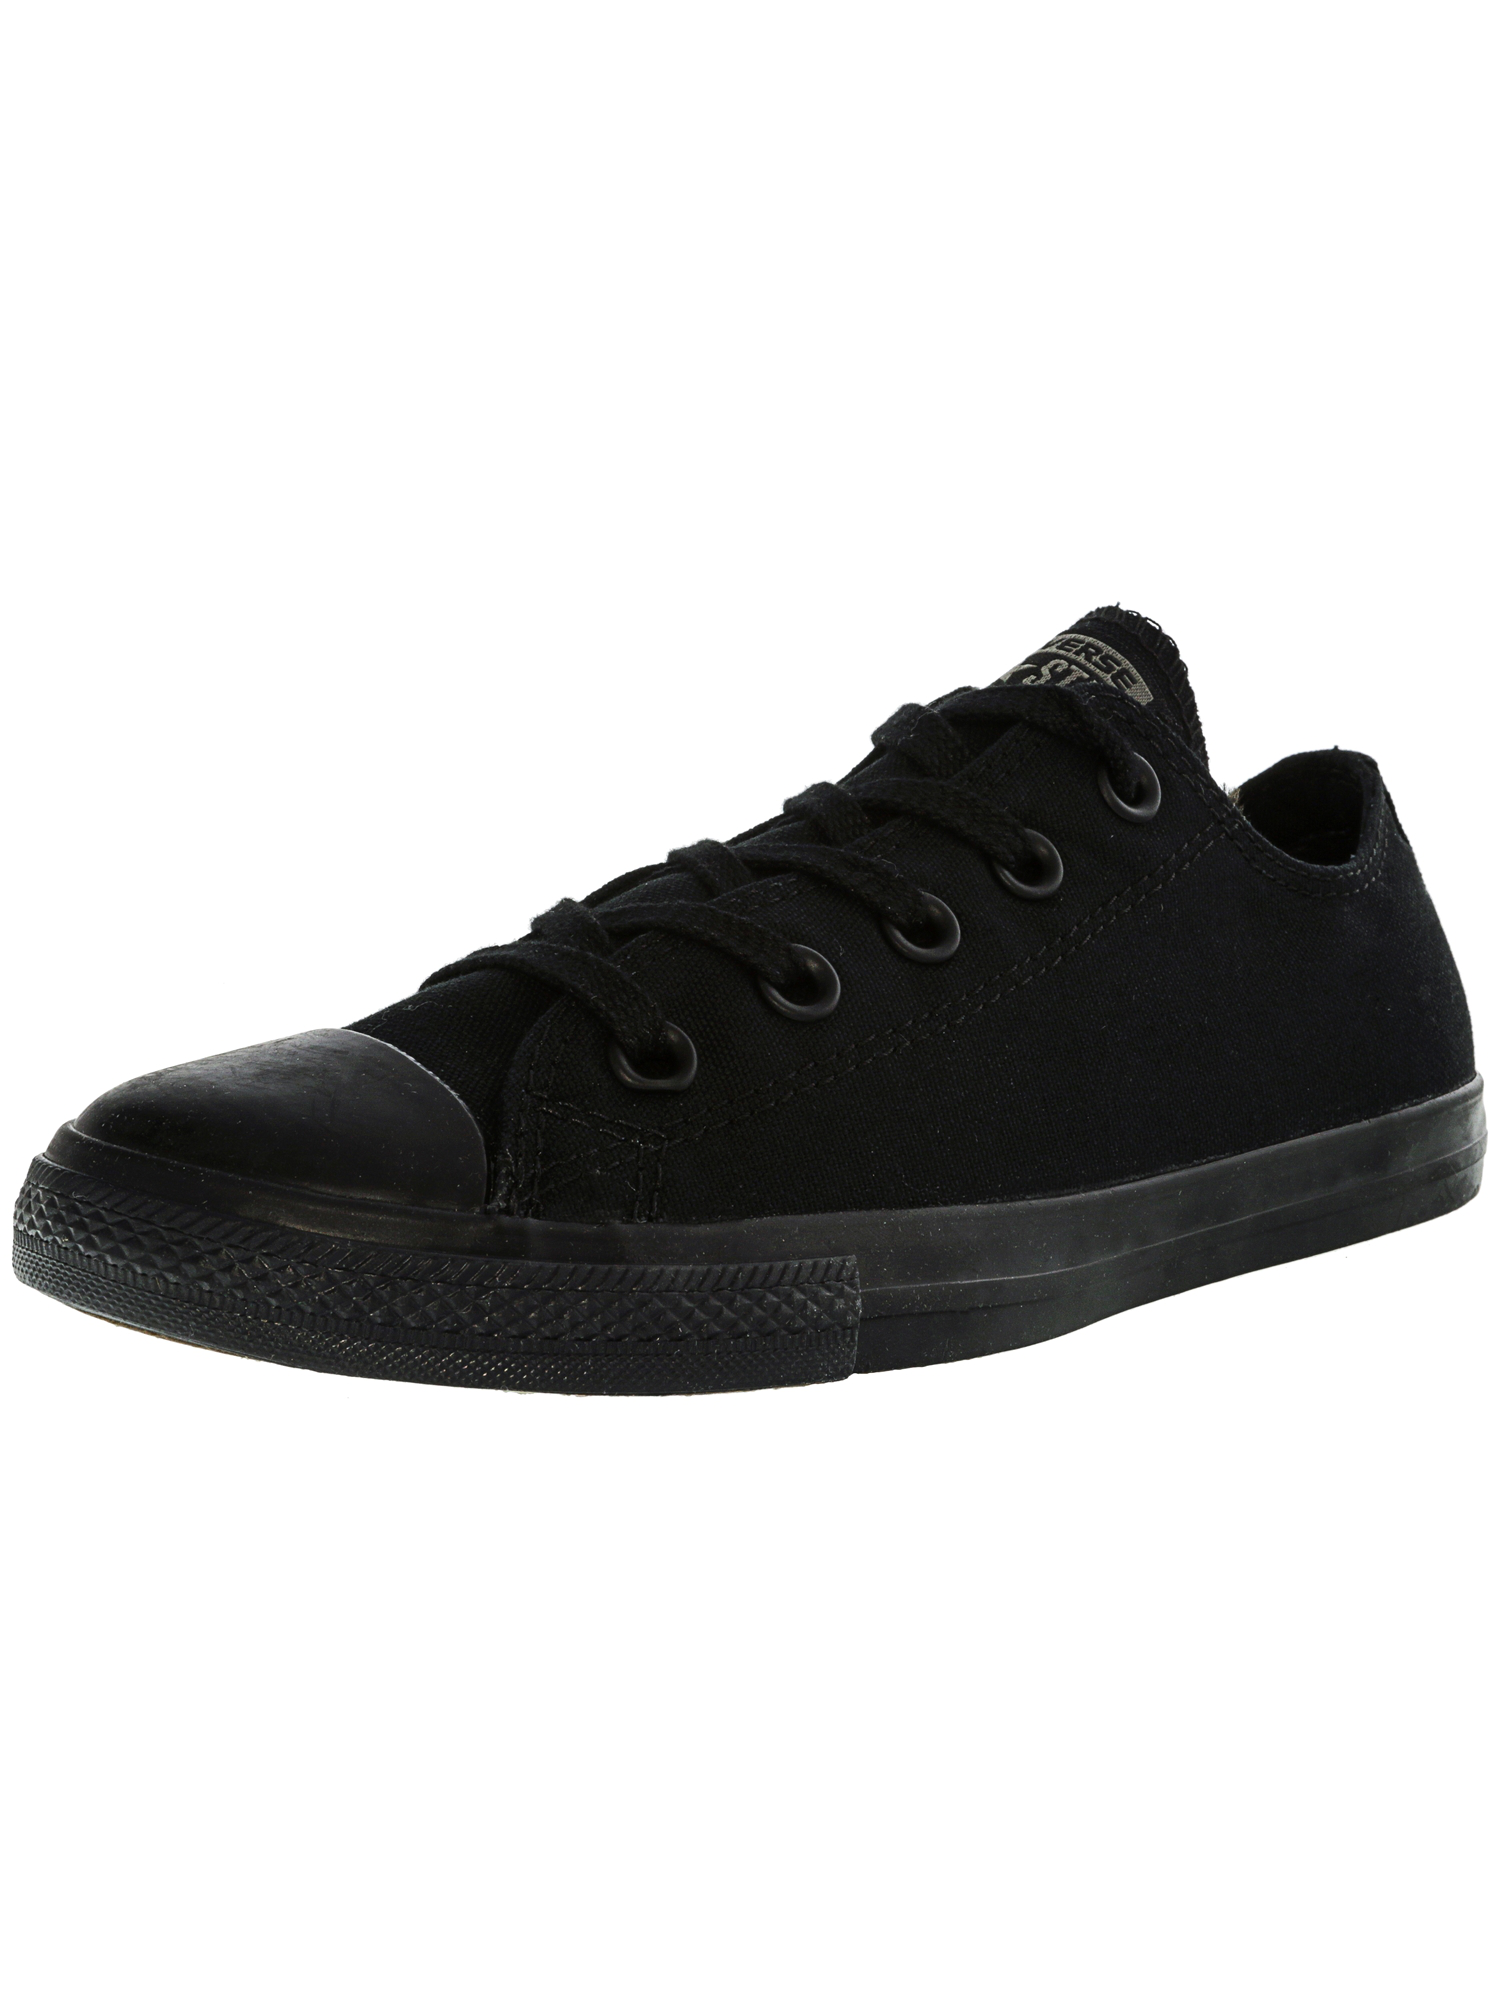 Converse Chuck Taylor Lean Ox Ankle-high Fashion Sneaker In Black | ModeSens